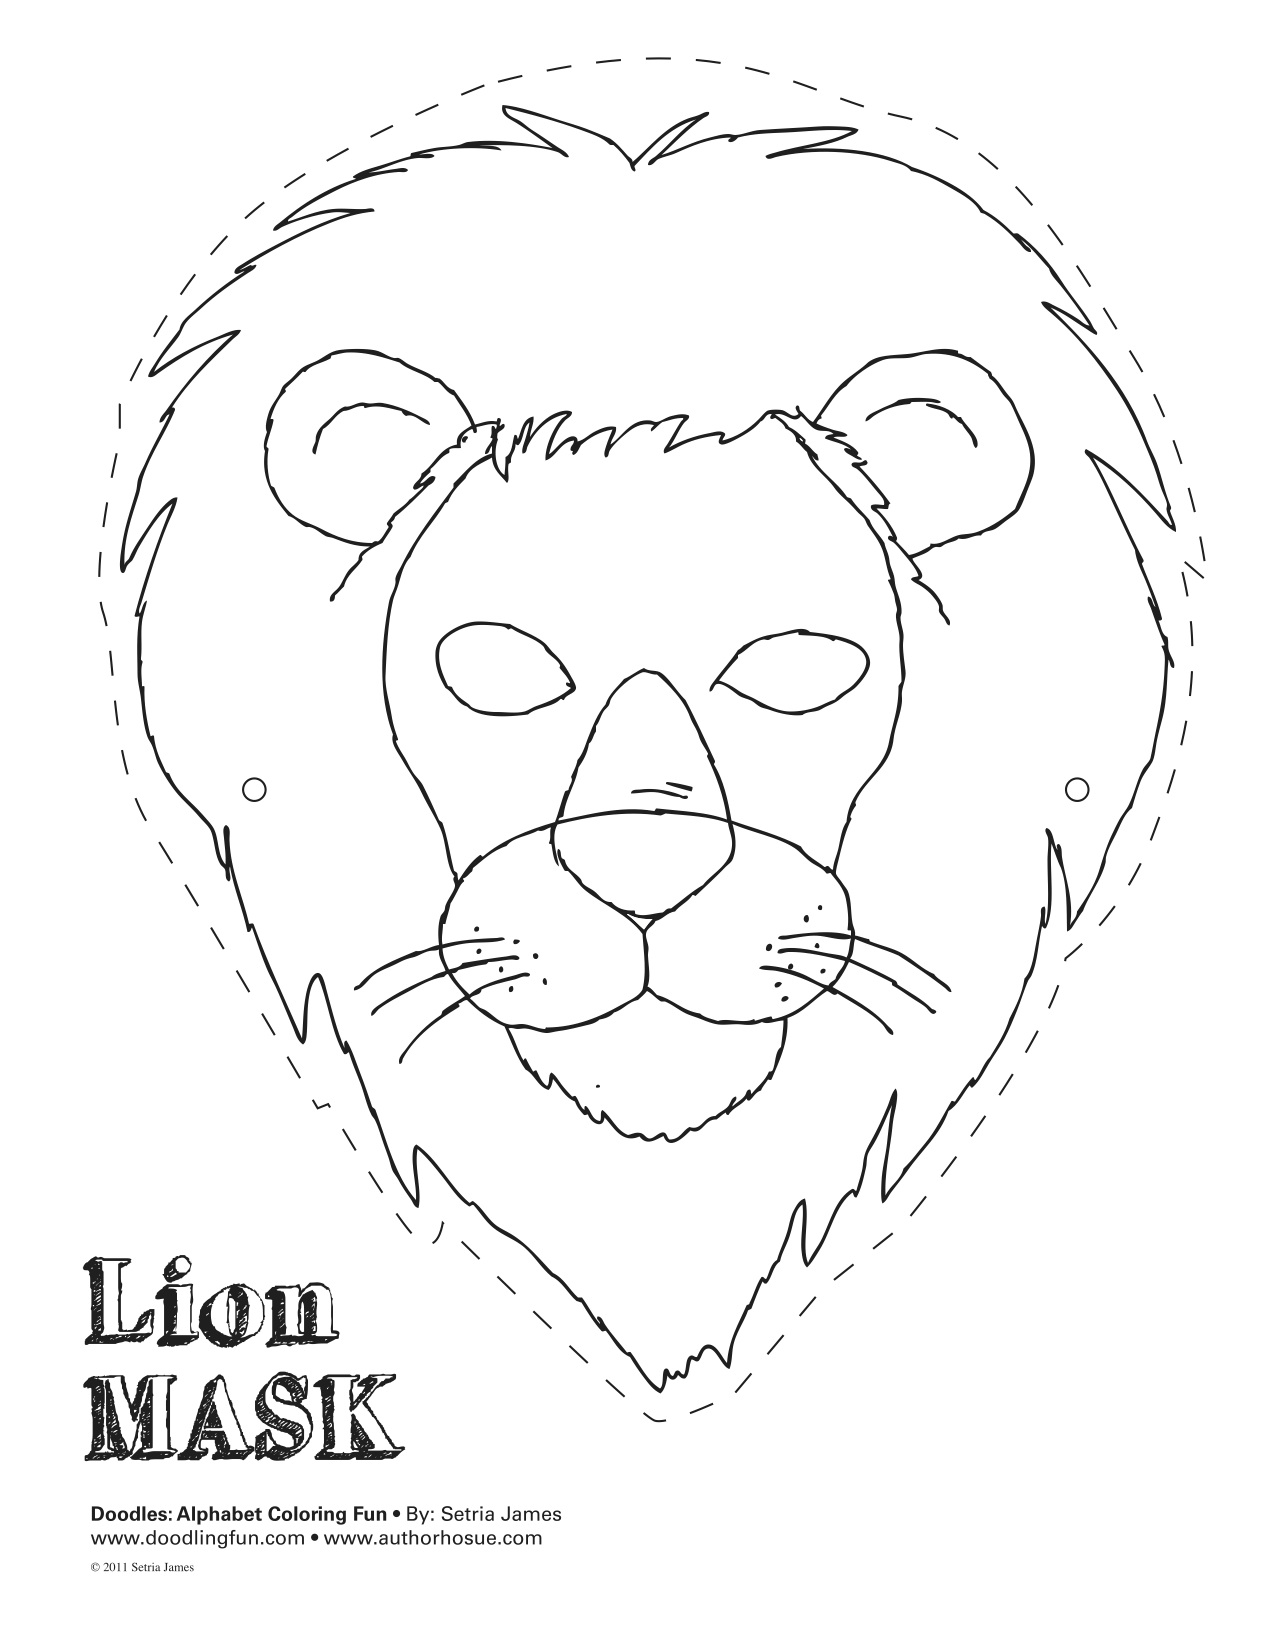 Lion Mask! #theatrics #kiddos #play #craft #coloring | Animal masks